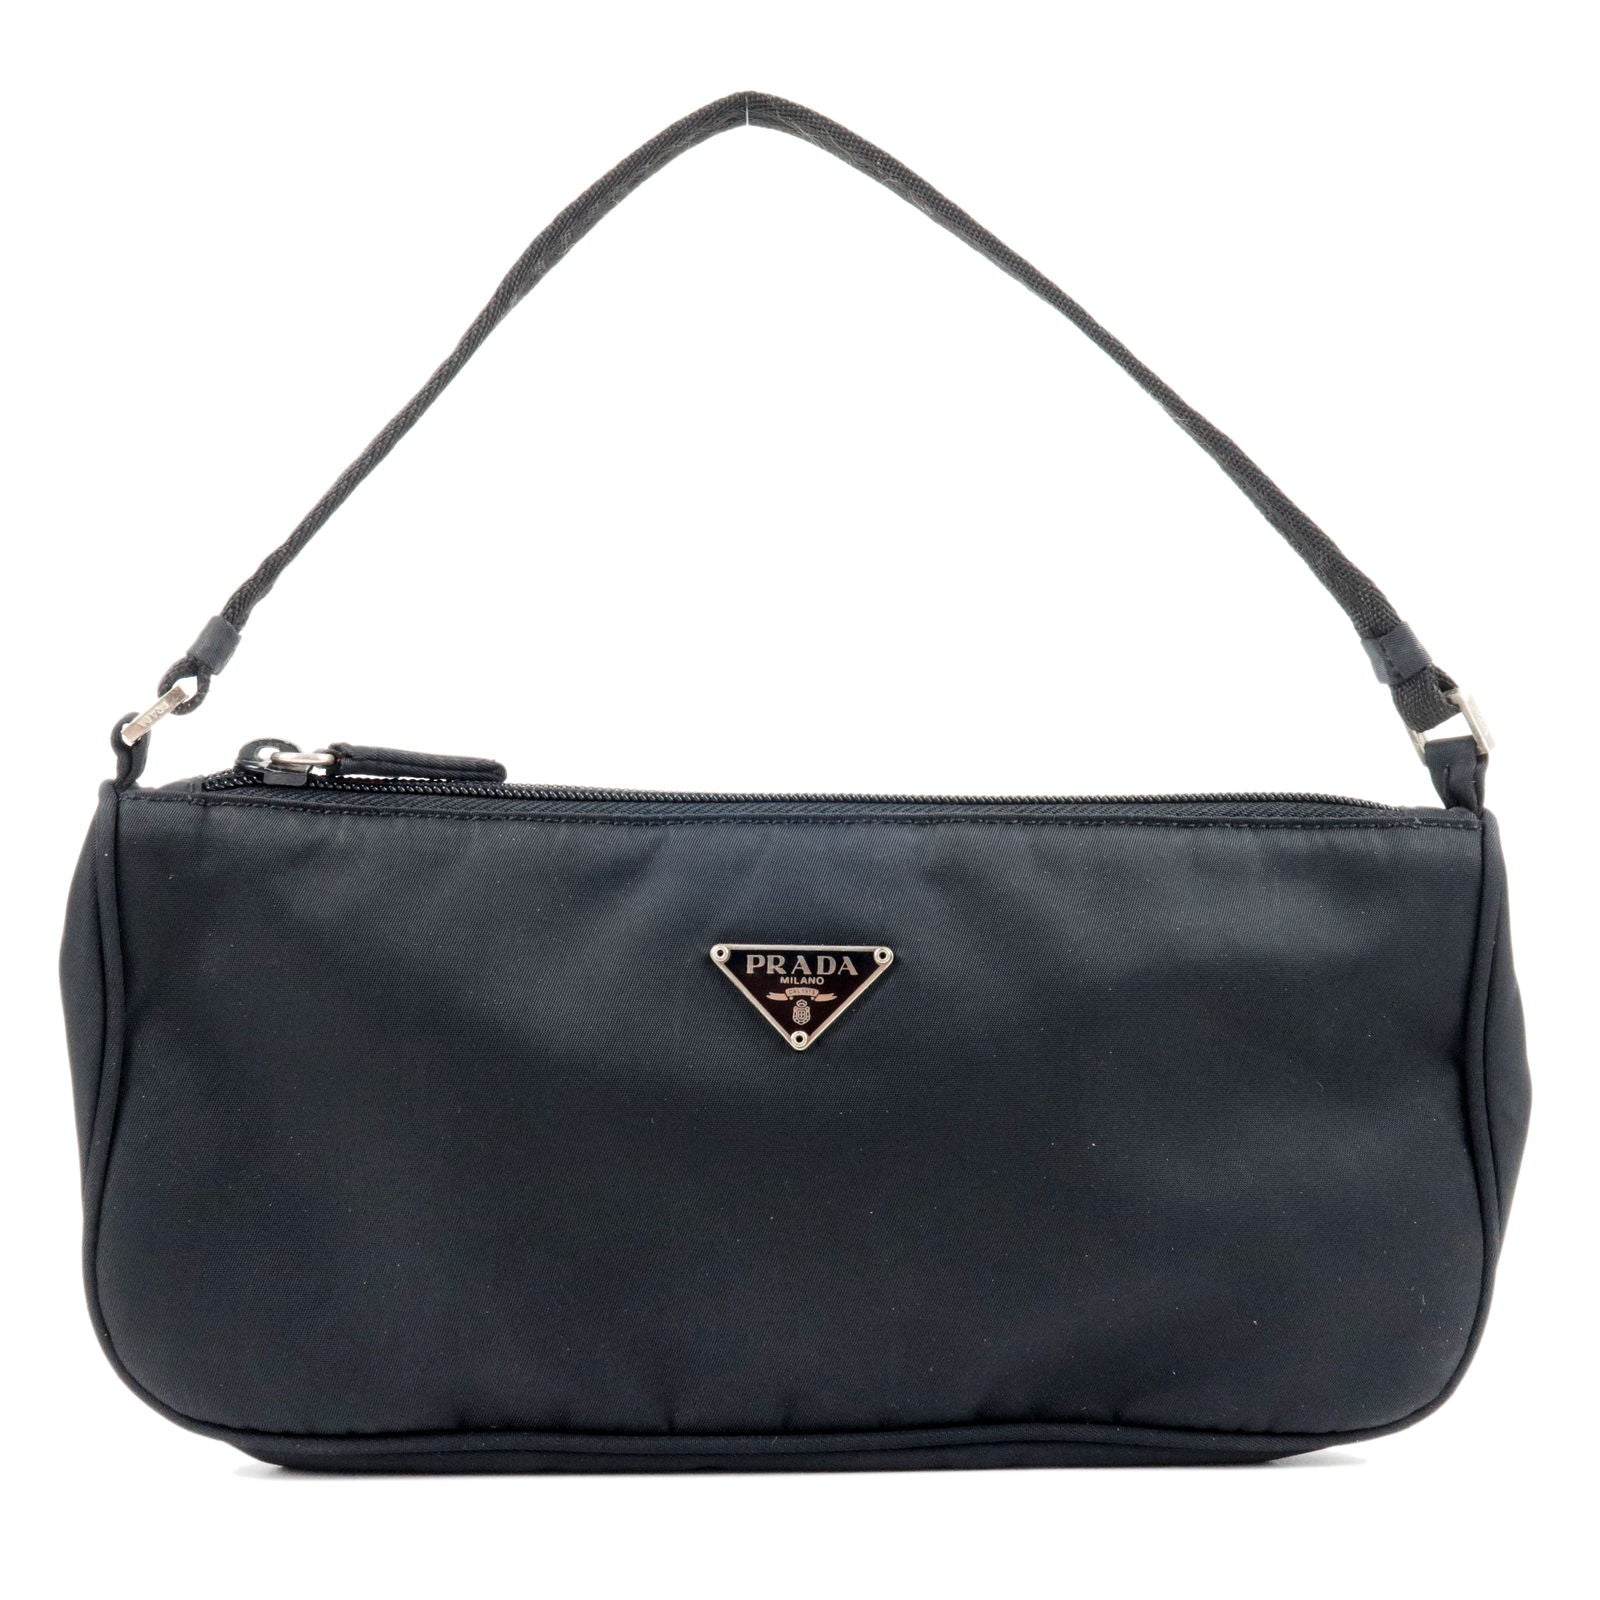 PRADA-Logo-Nylon-Hand-Bag-Pouch-Purse-Mini-Bag-NERO-Black